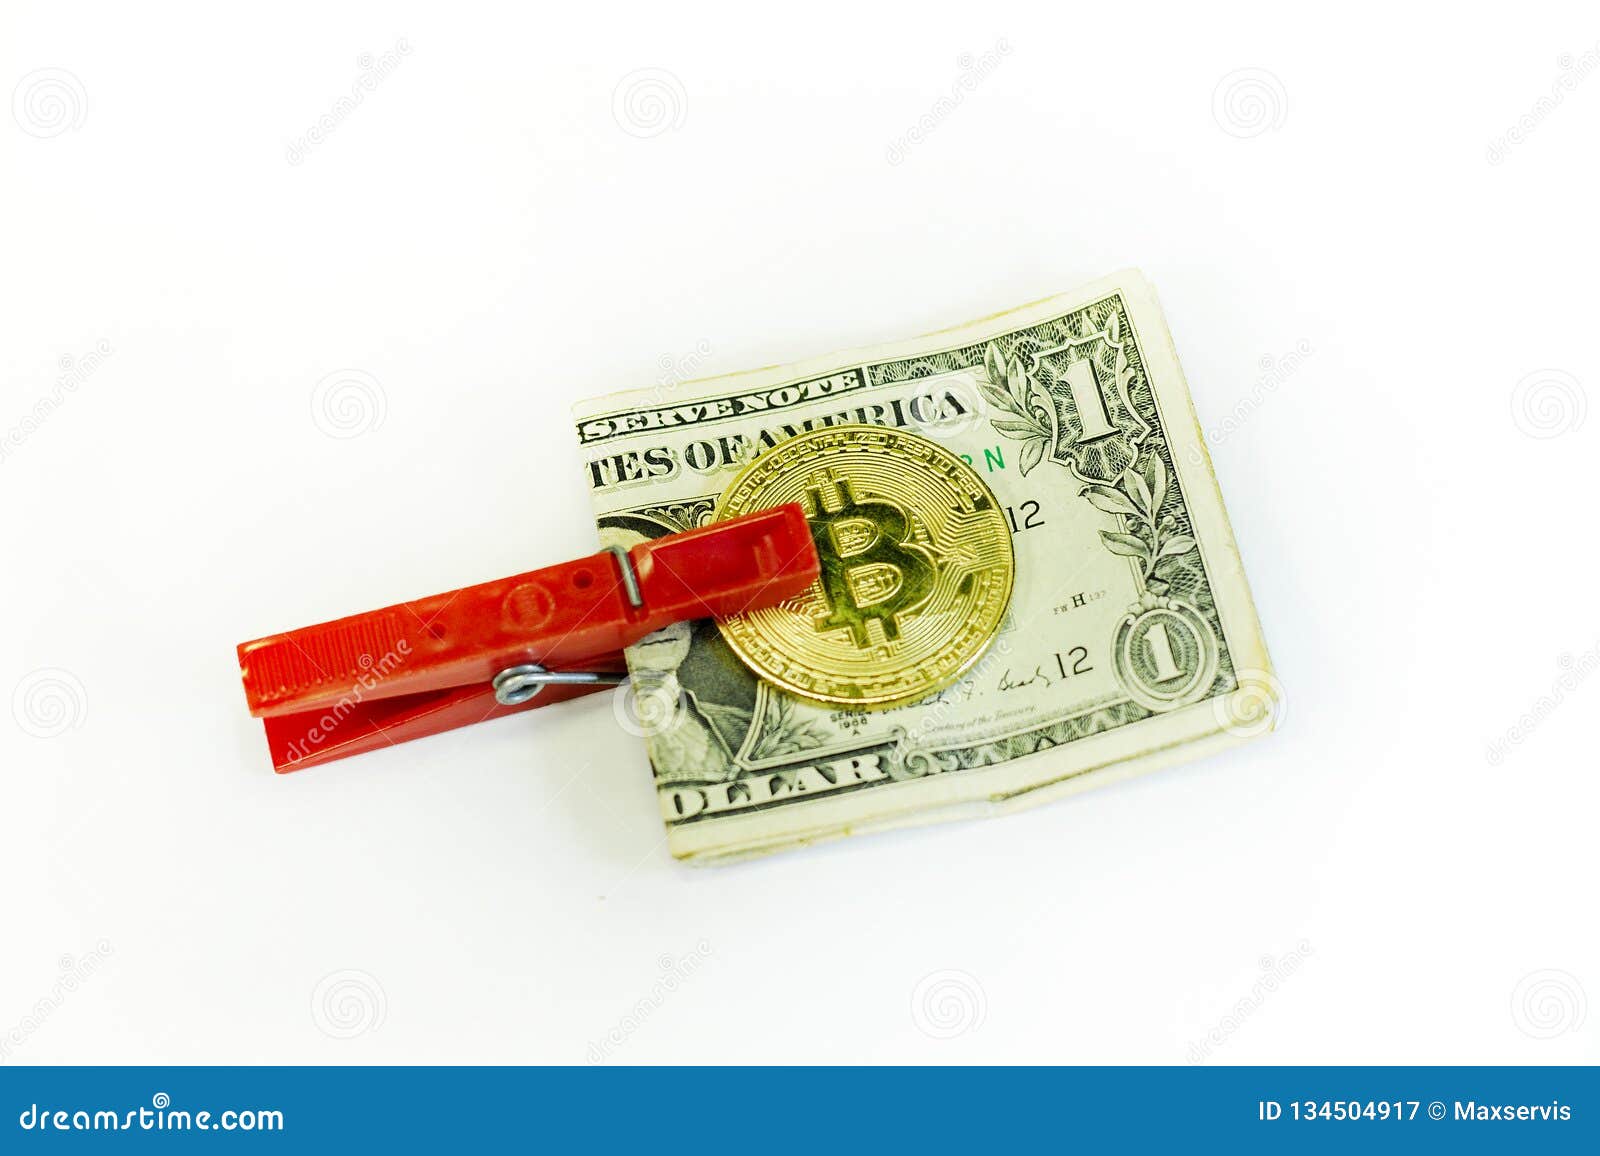 Money Laundering Bitcoin Stock Image Image Of Bill 134504917 - 